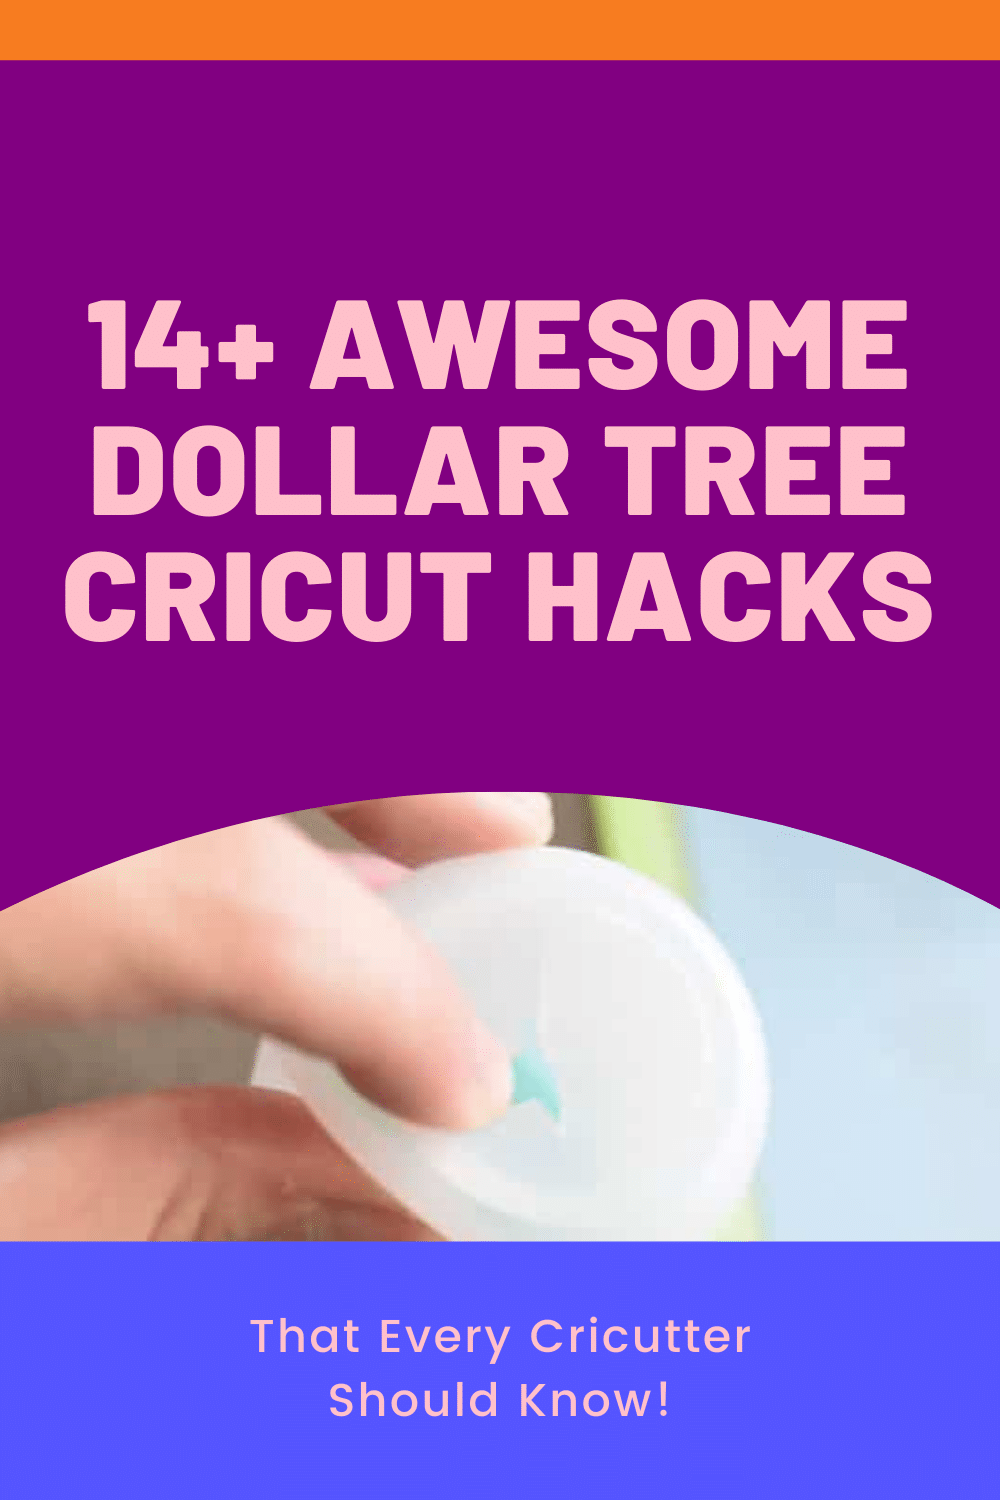 20+ Dollar Tree Cricut Ideas To Get You Saving Money! - Leap of